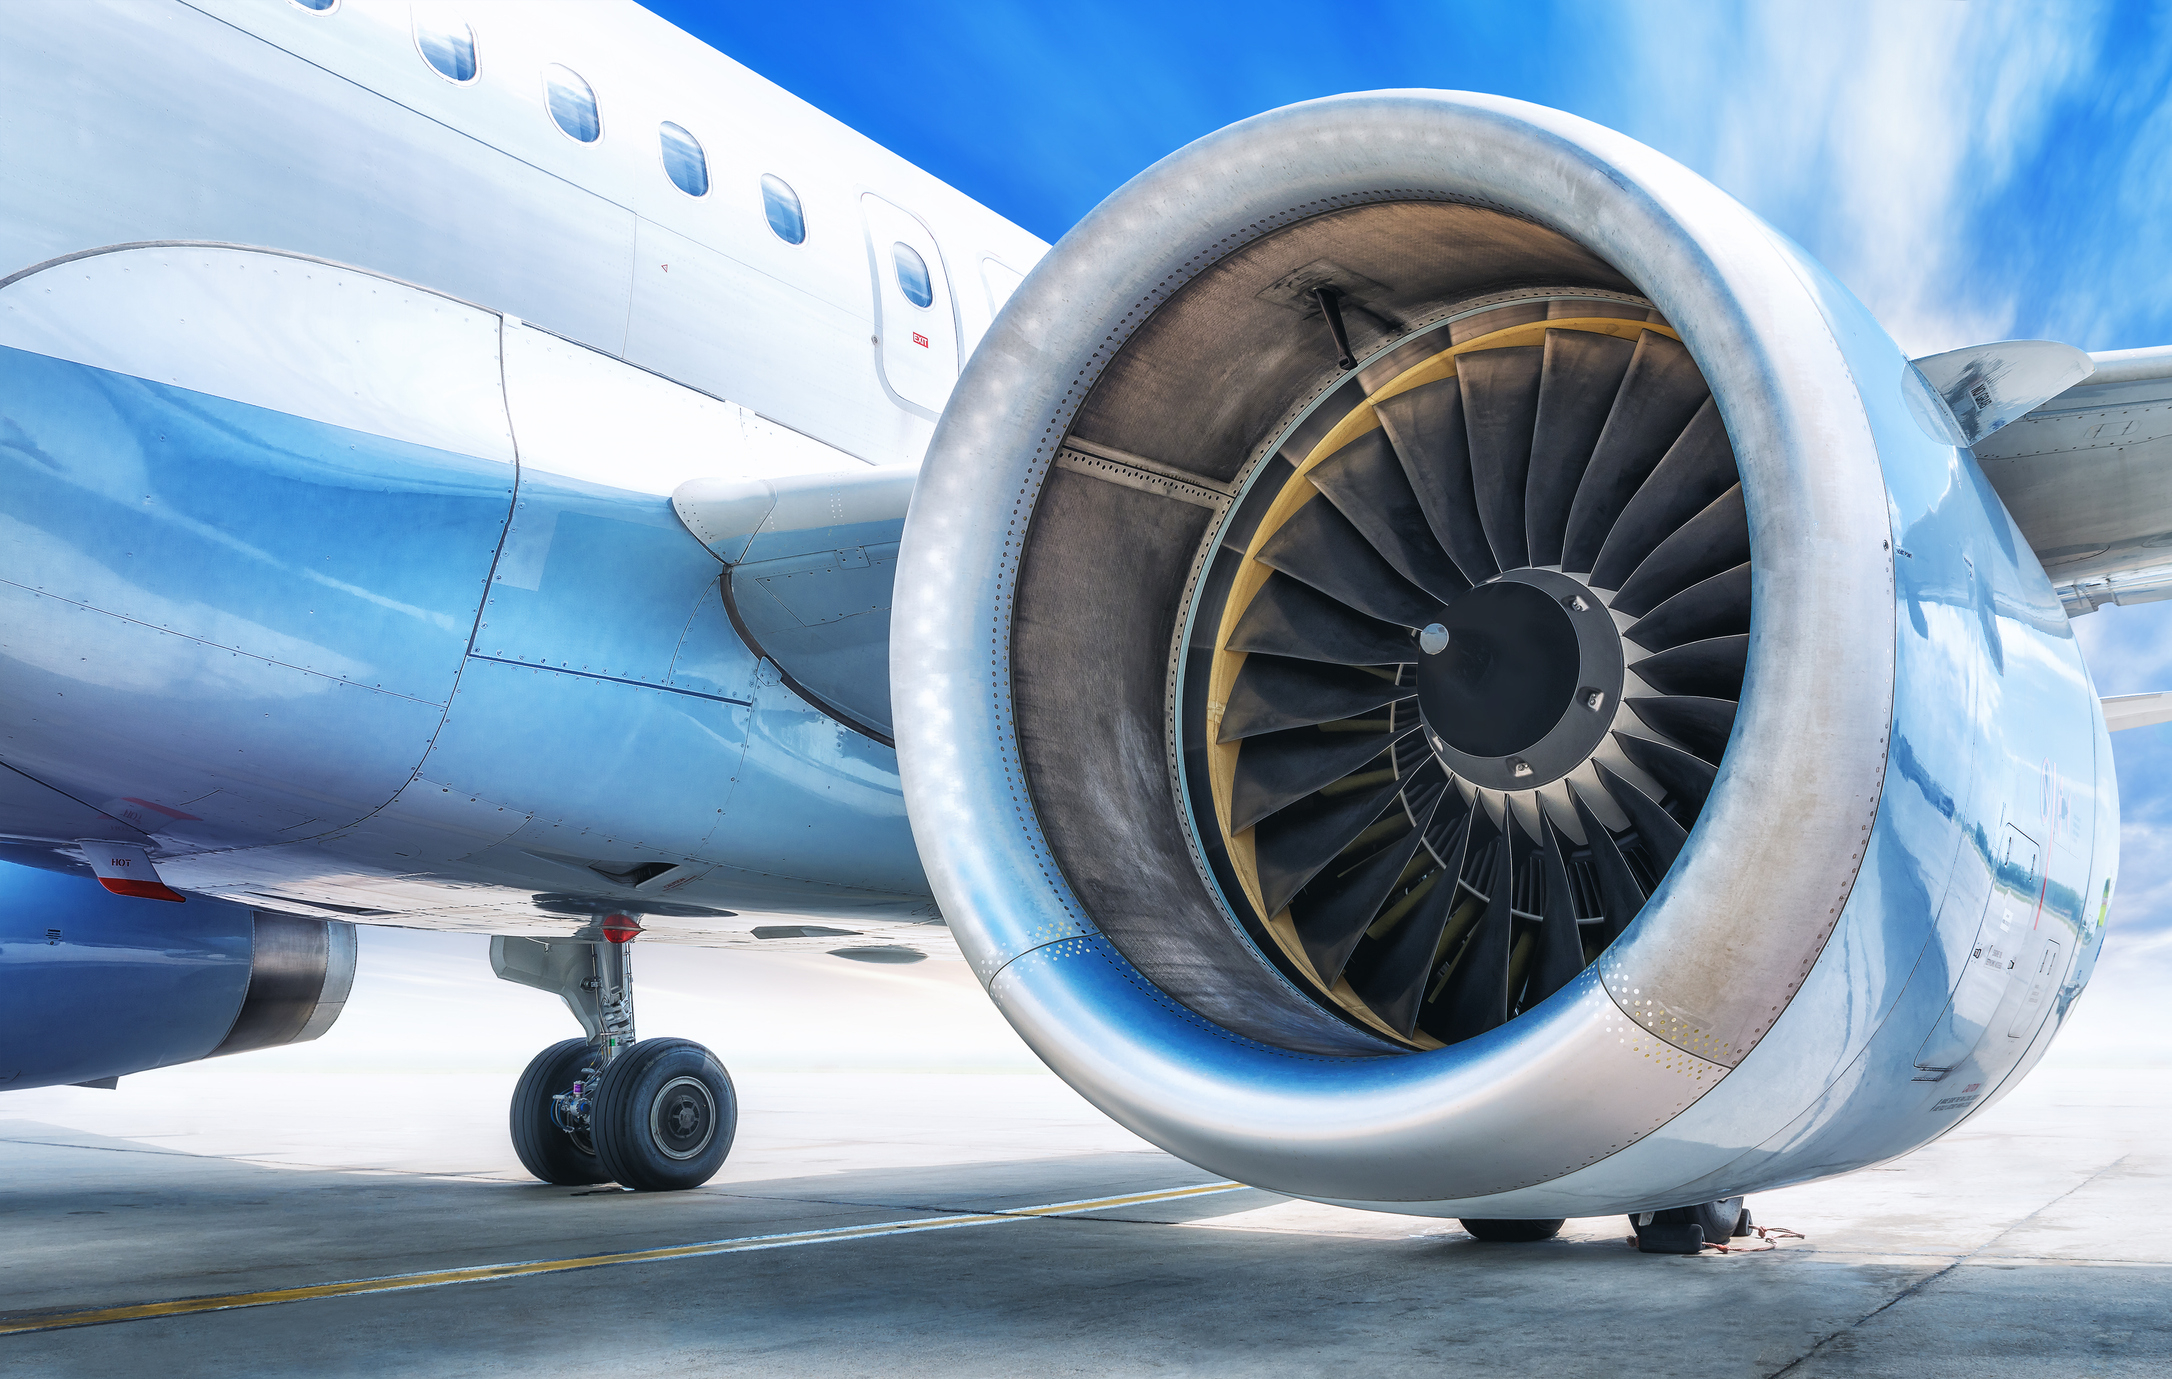 jet engine against a blue sky